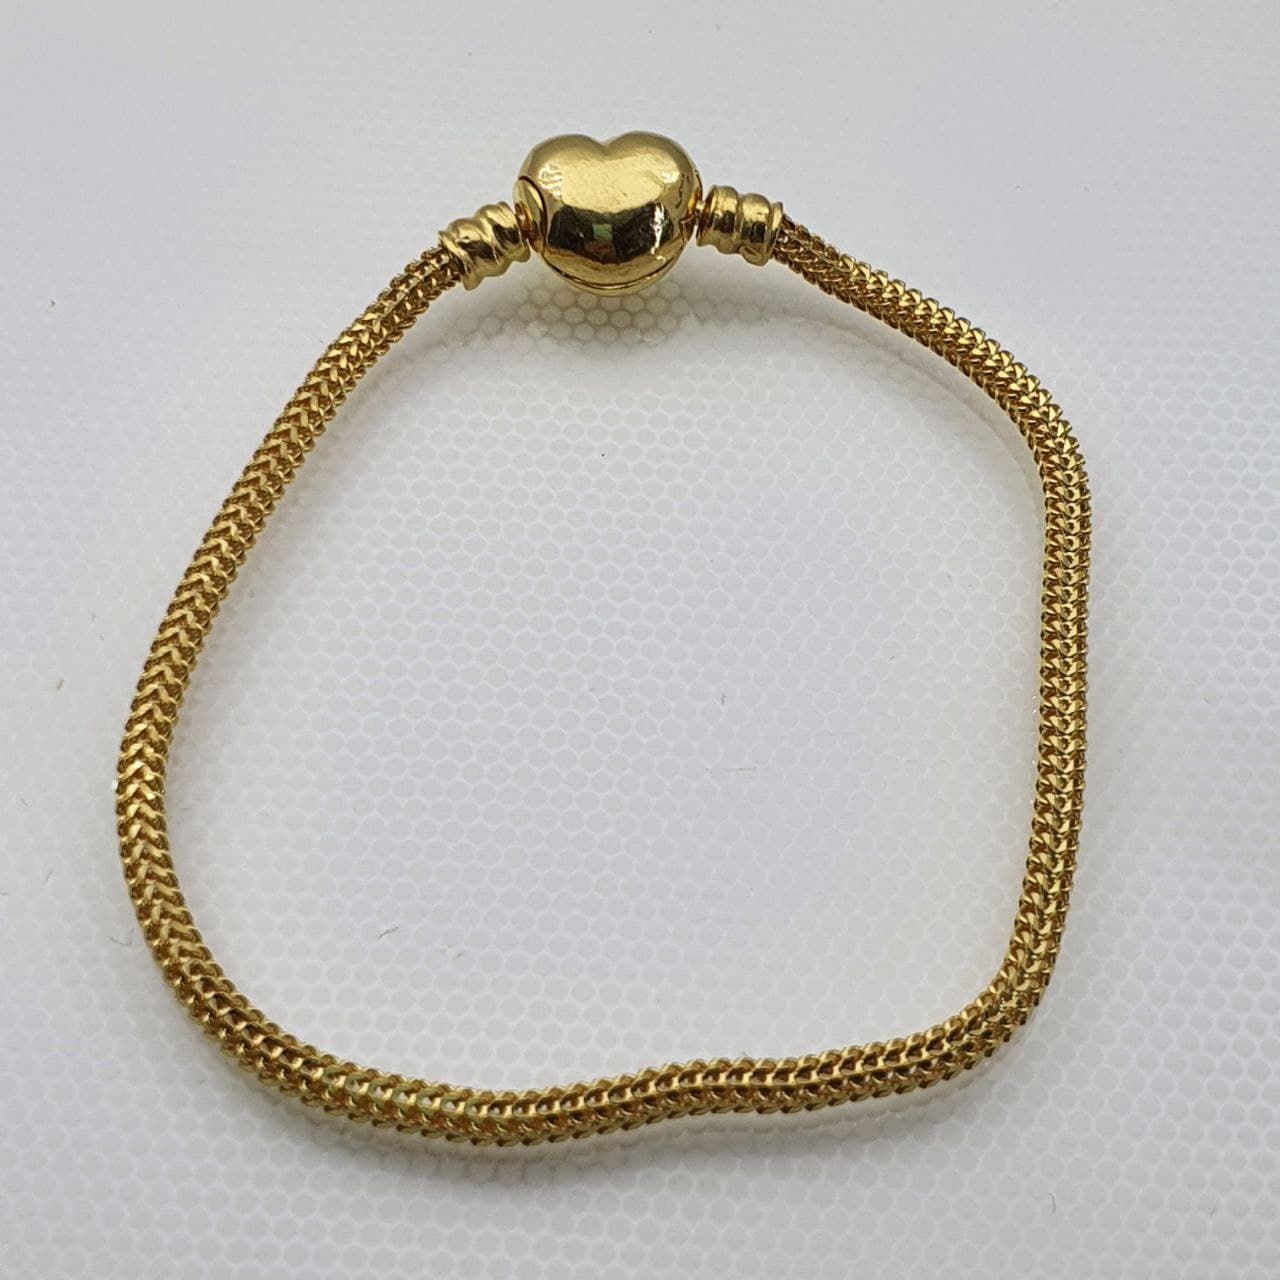 22k / 916 Gold Charm bracelet with shiny heart lock V2-916 gold-Best Gold Shop